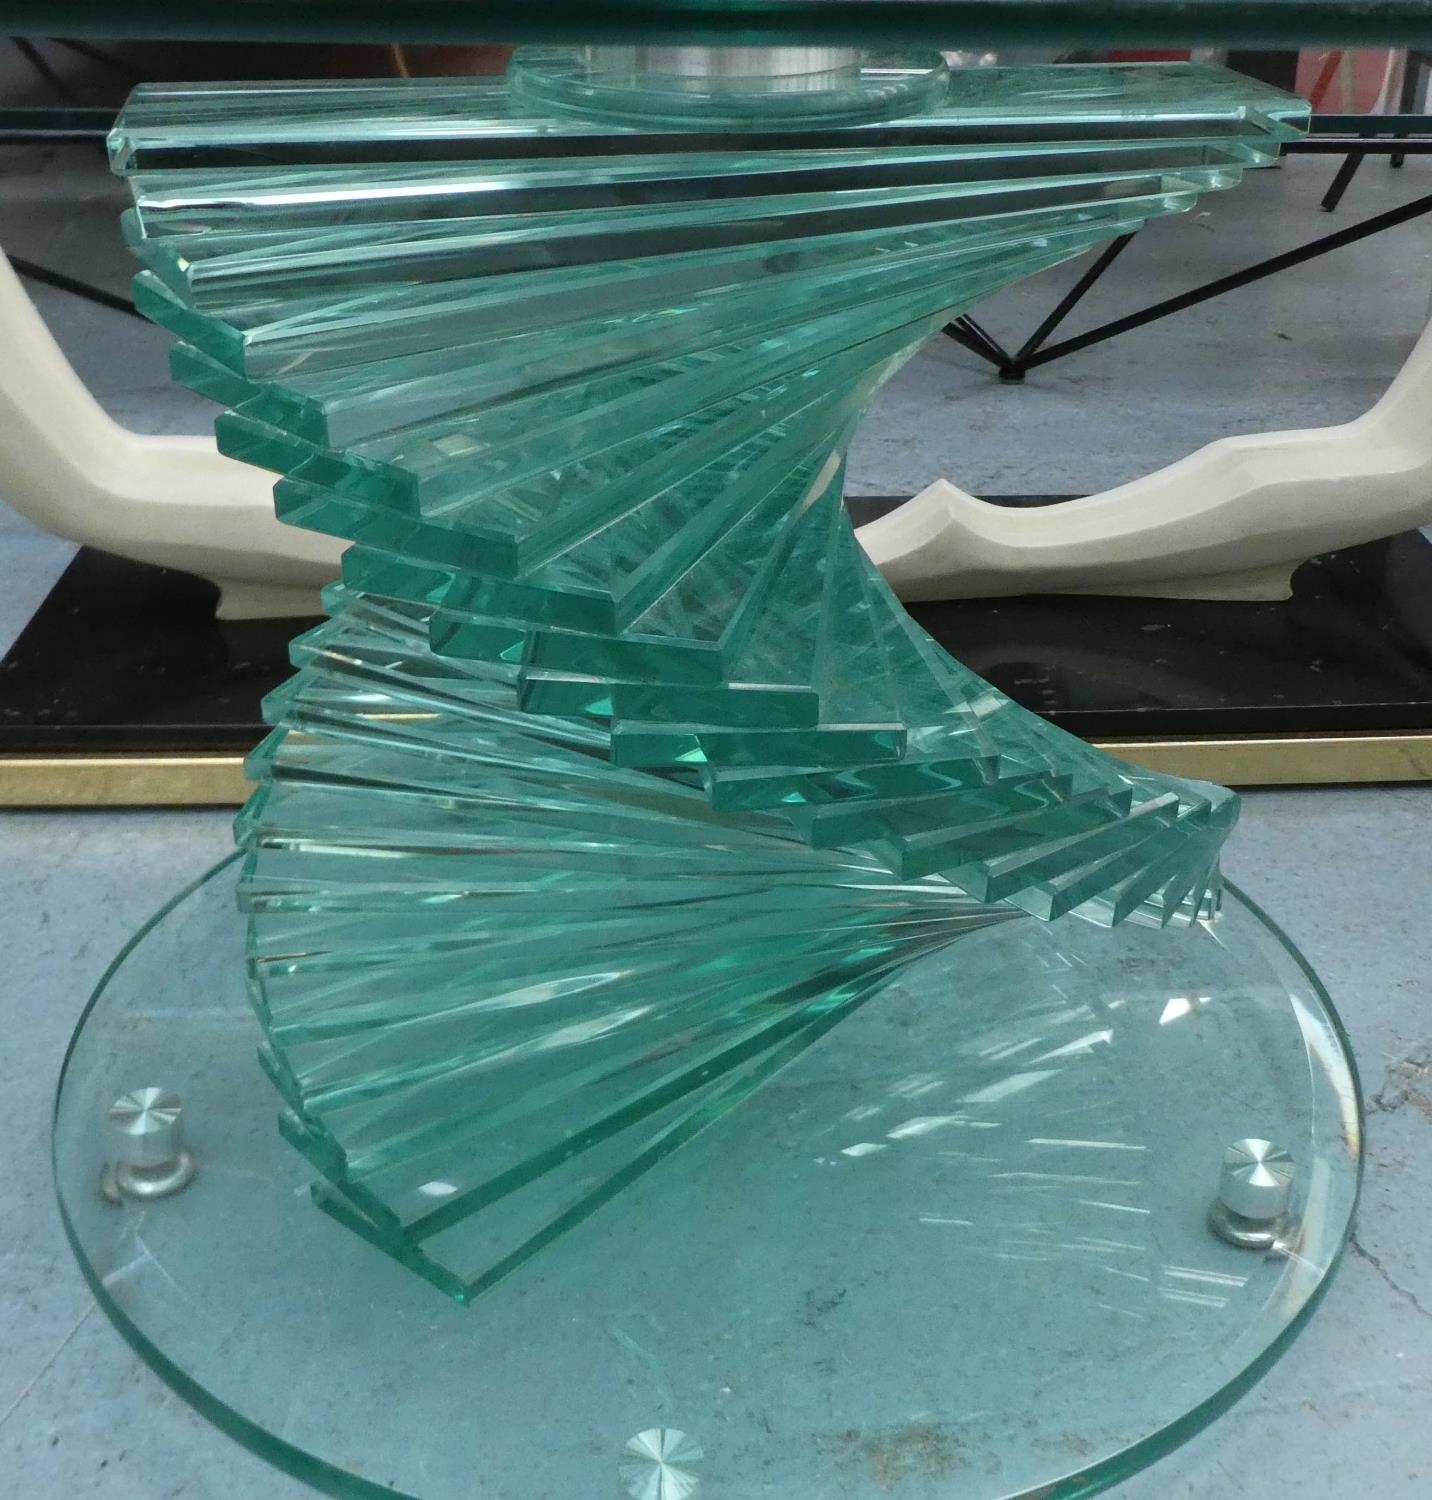 GLASS HELIX LOW TABLE, 119cm x 65cm x 45cm. - Image 2 of 4